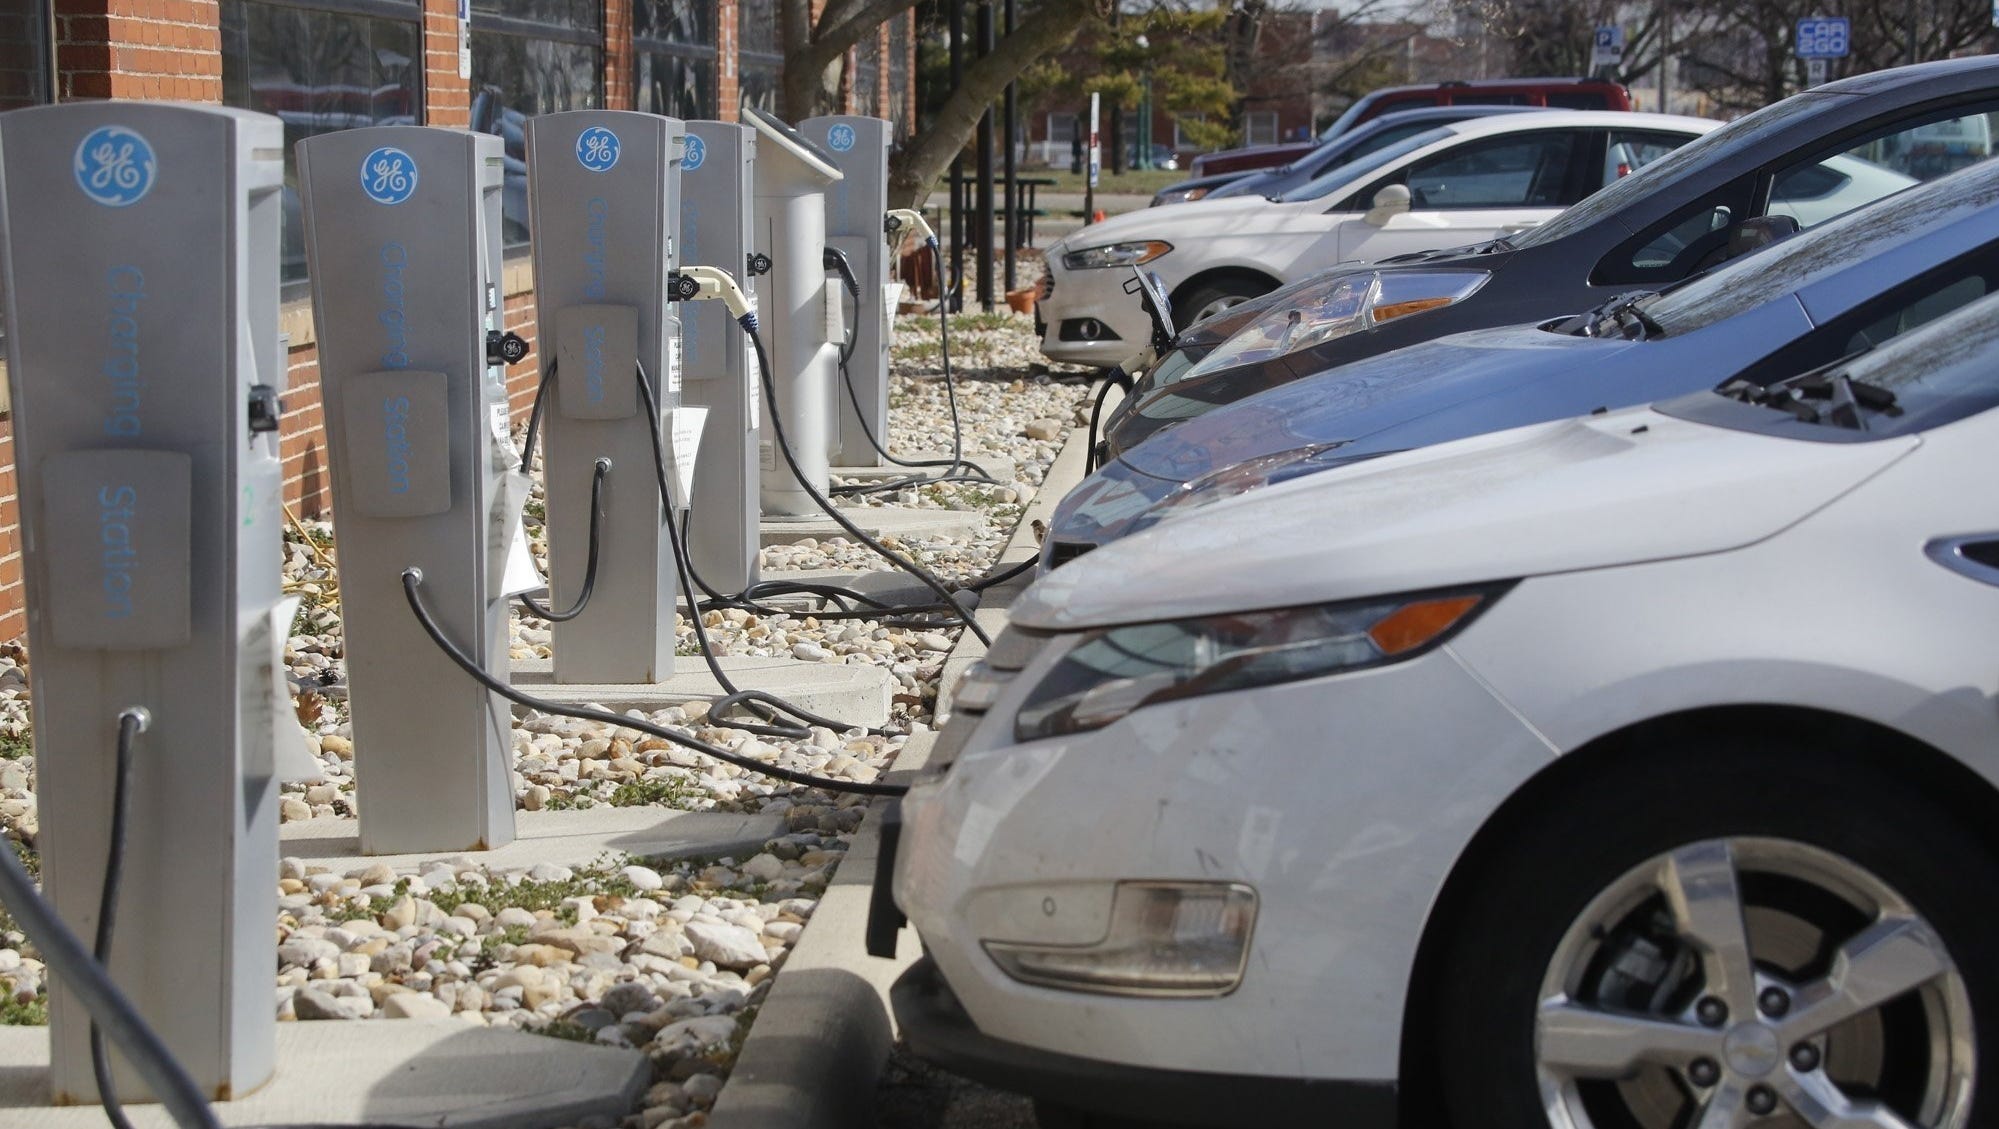 AEP Ohio launches chargingstation rebate program